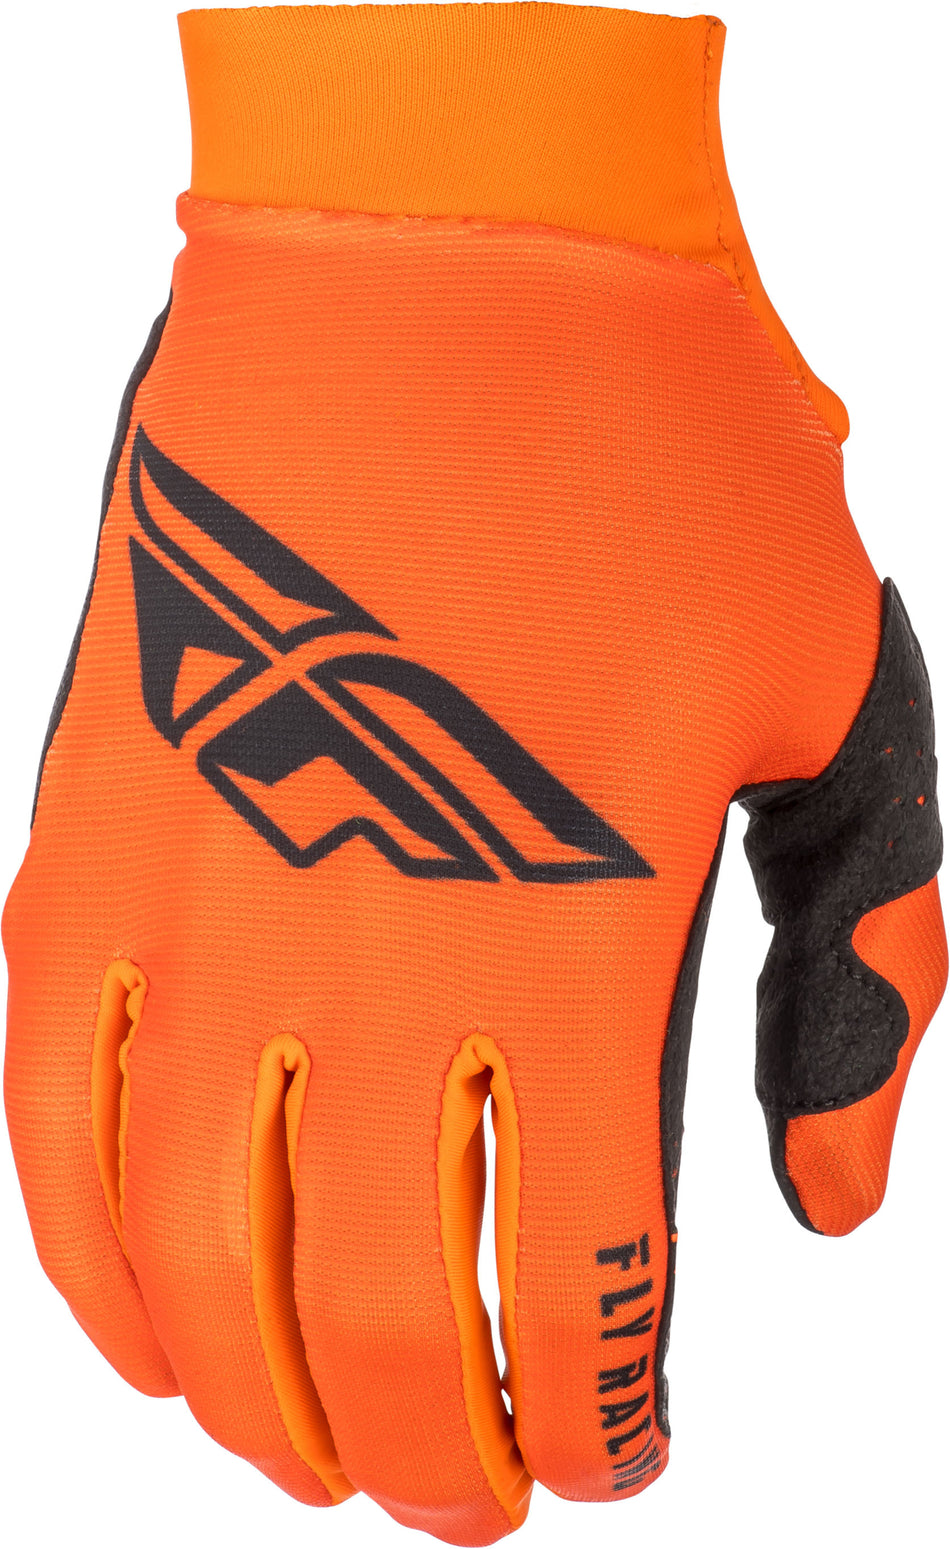 FLY RACING Pro Lite Gloves Orange/Black Sz 12 372-81712